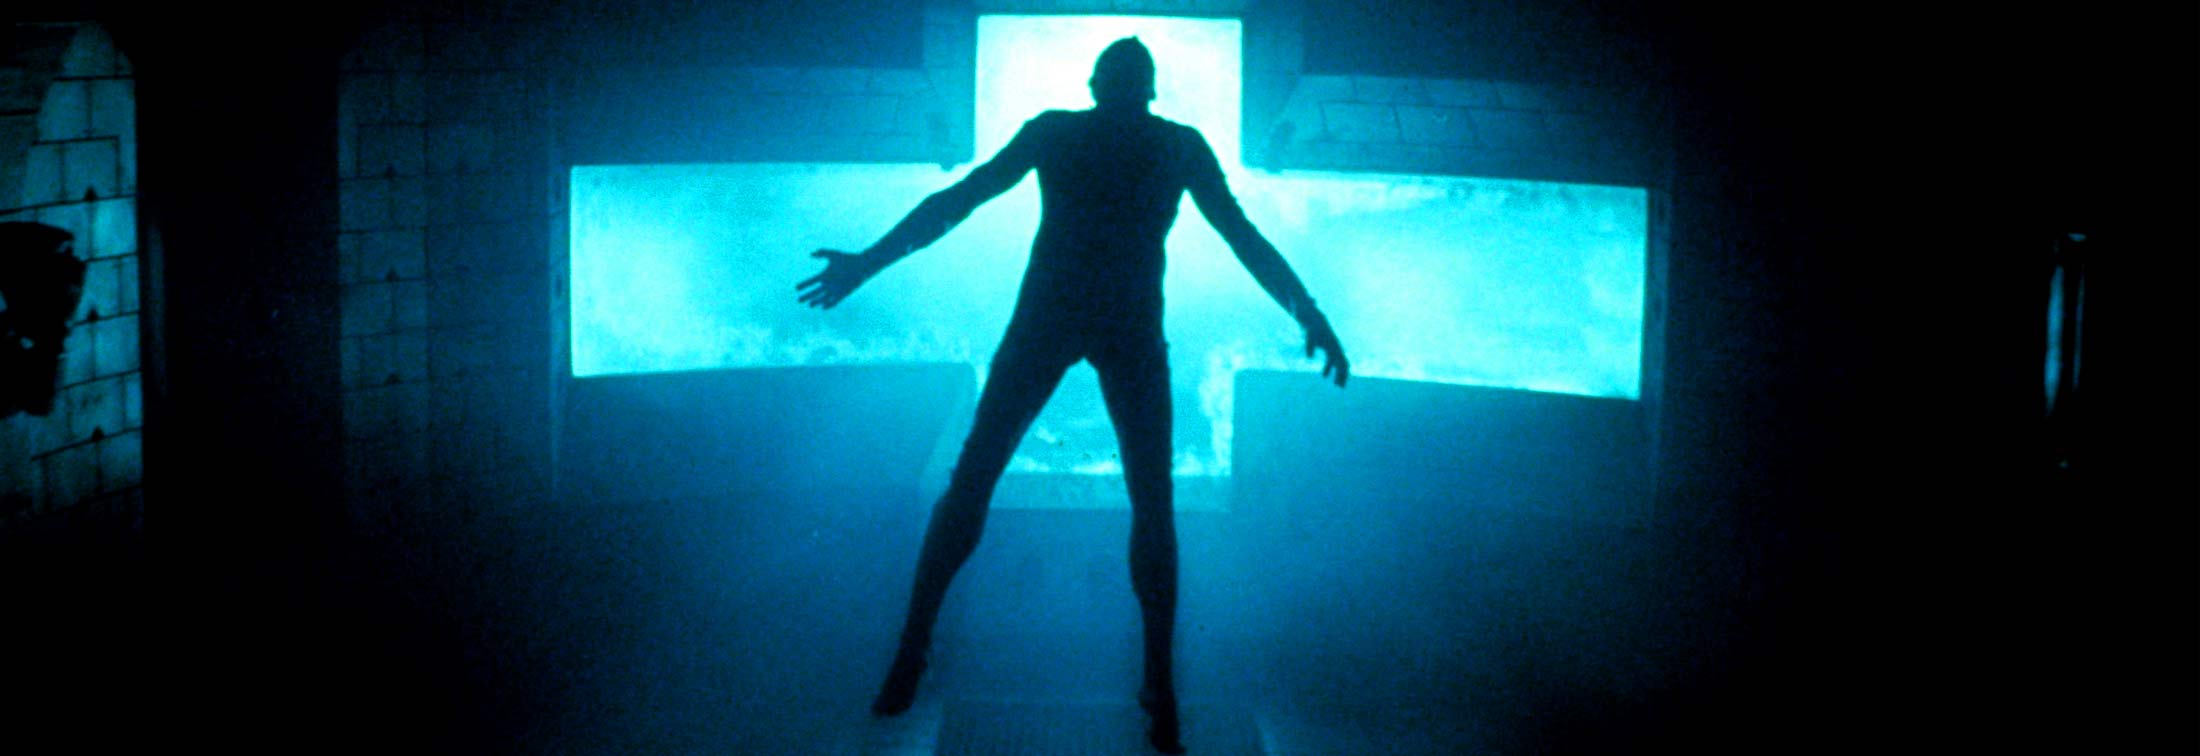 Event Horizon - Revisiting the sci-fi horror cult classic